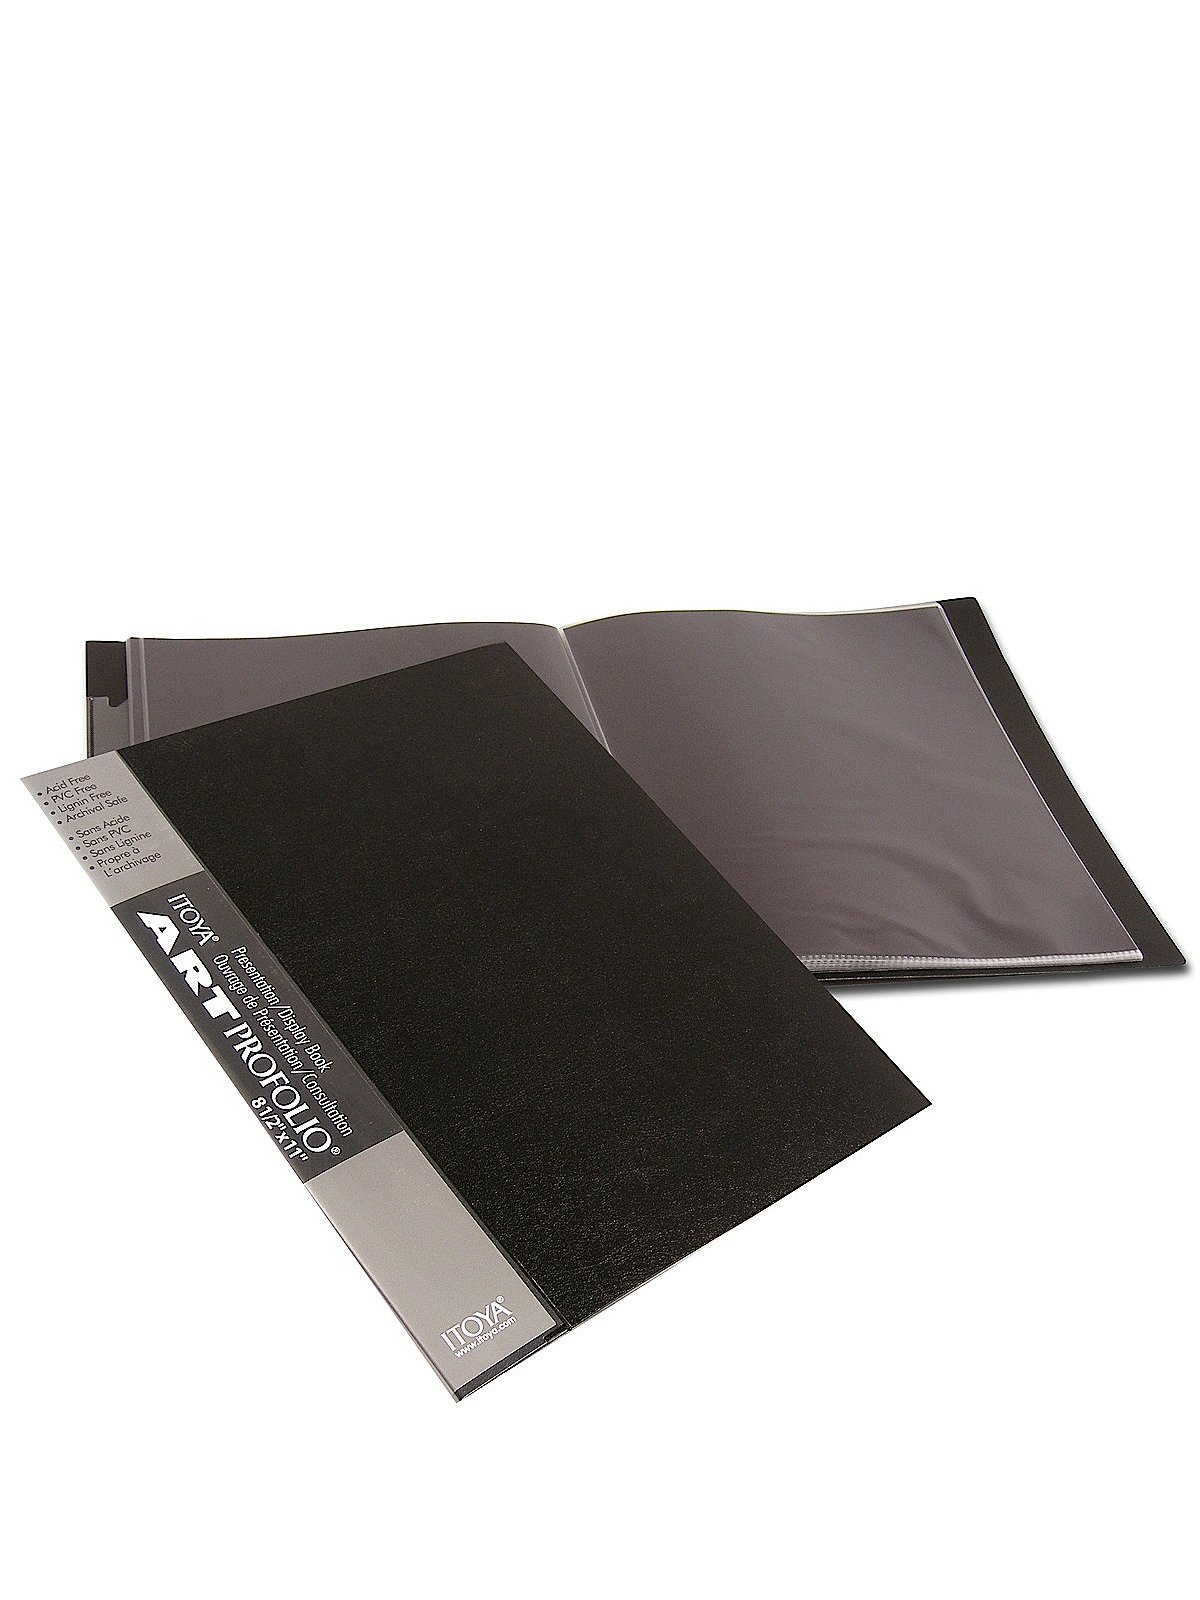 Folder with Plastic Sleeves 1 Pack 18x24 Black Portfolio Folder